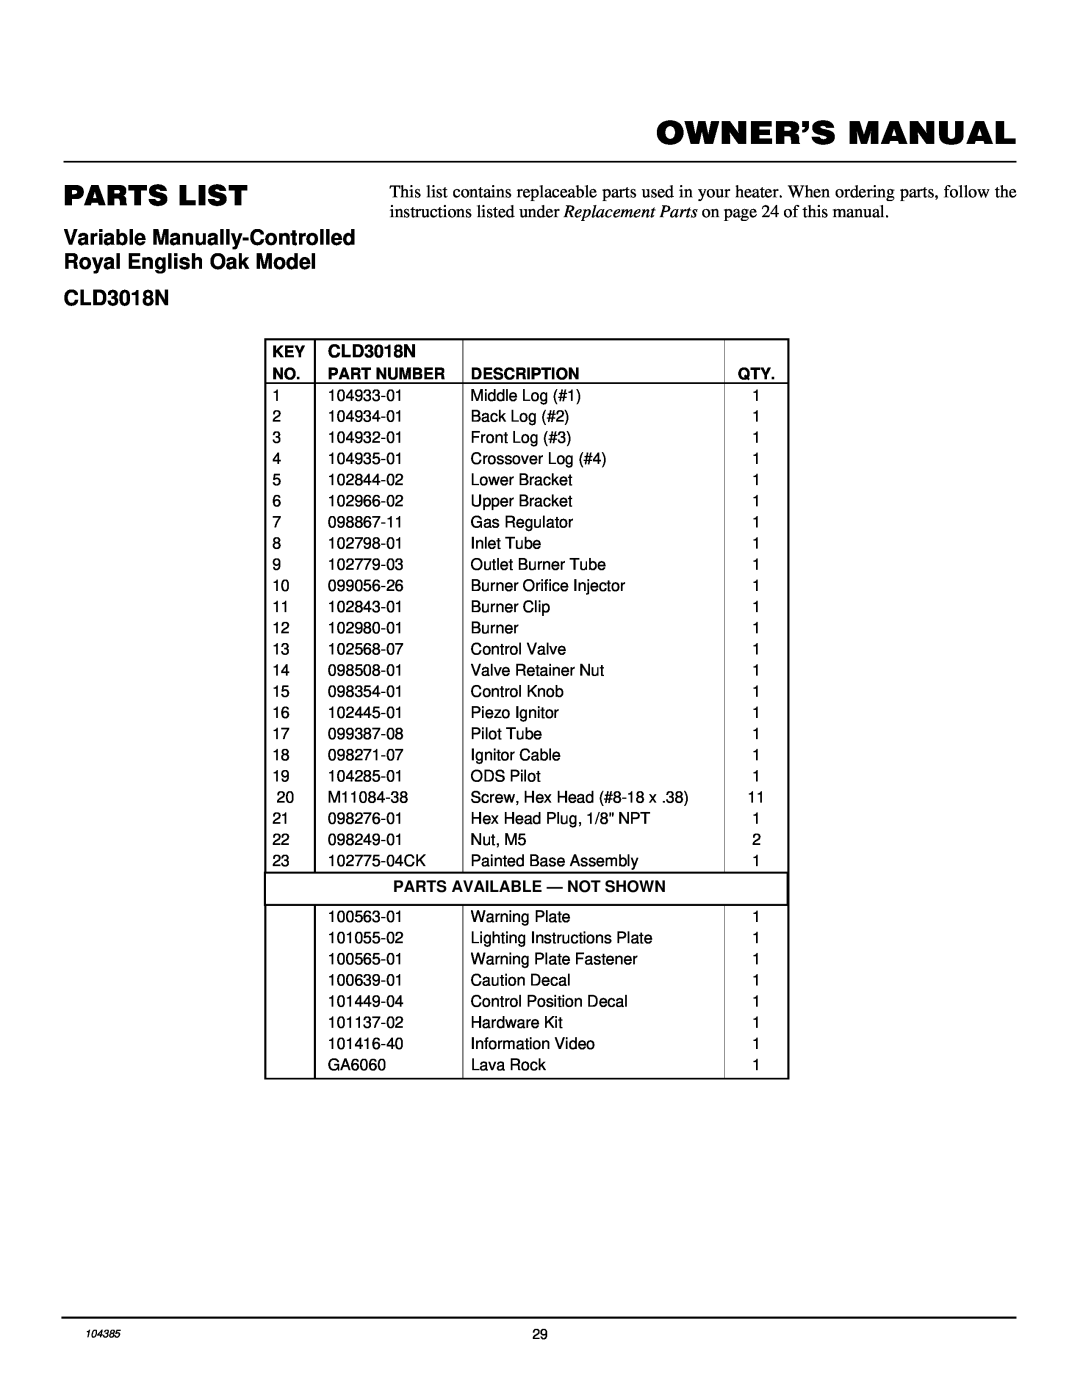 Desa CCL3930NT(A), CLD3924NT installation manual Parts List, CLD3018N, Part Number, Description, Parts Available - Not Shown 